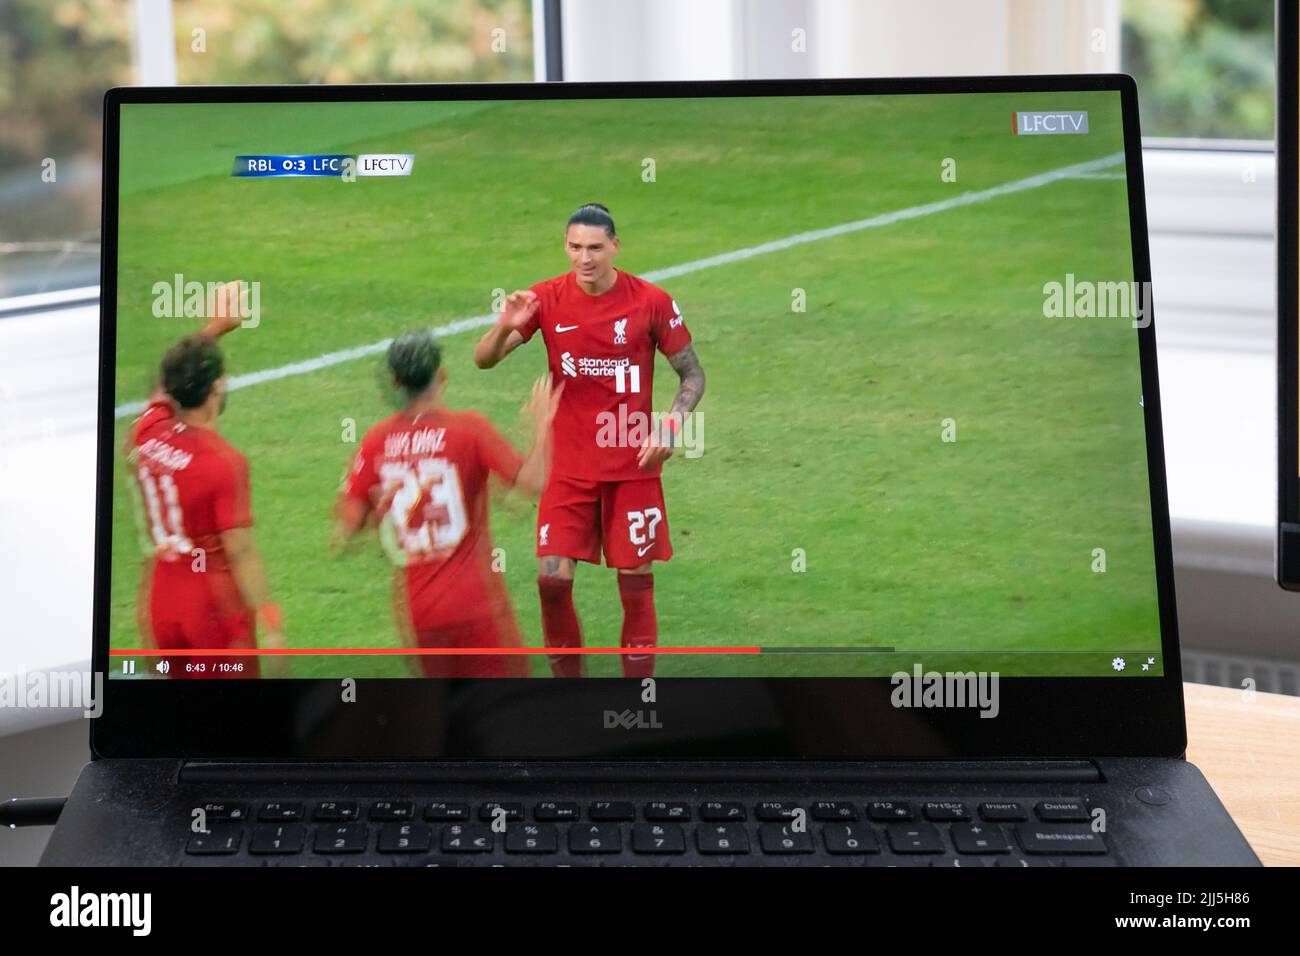 Darwin Nunez celebrates scoring his 2nd goal Liverpool FC 5-0 win vs RB Leipzig in the July 21st 2022 pre season friendly on LFC TV on a laptop screen Stock Photo